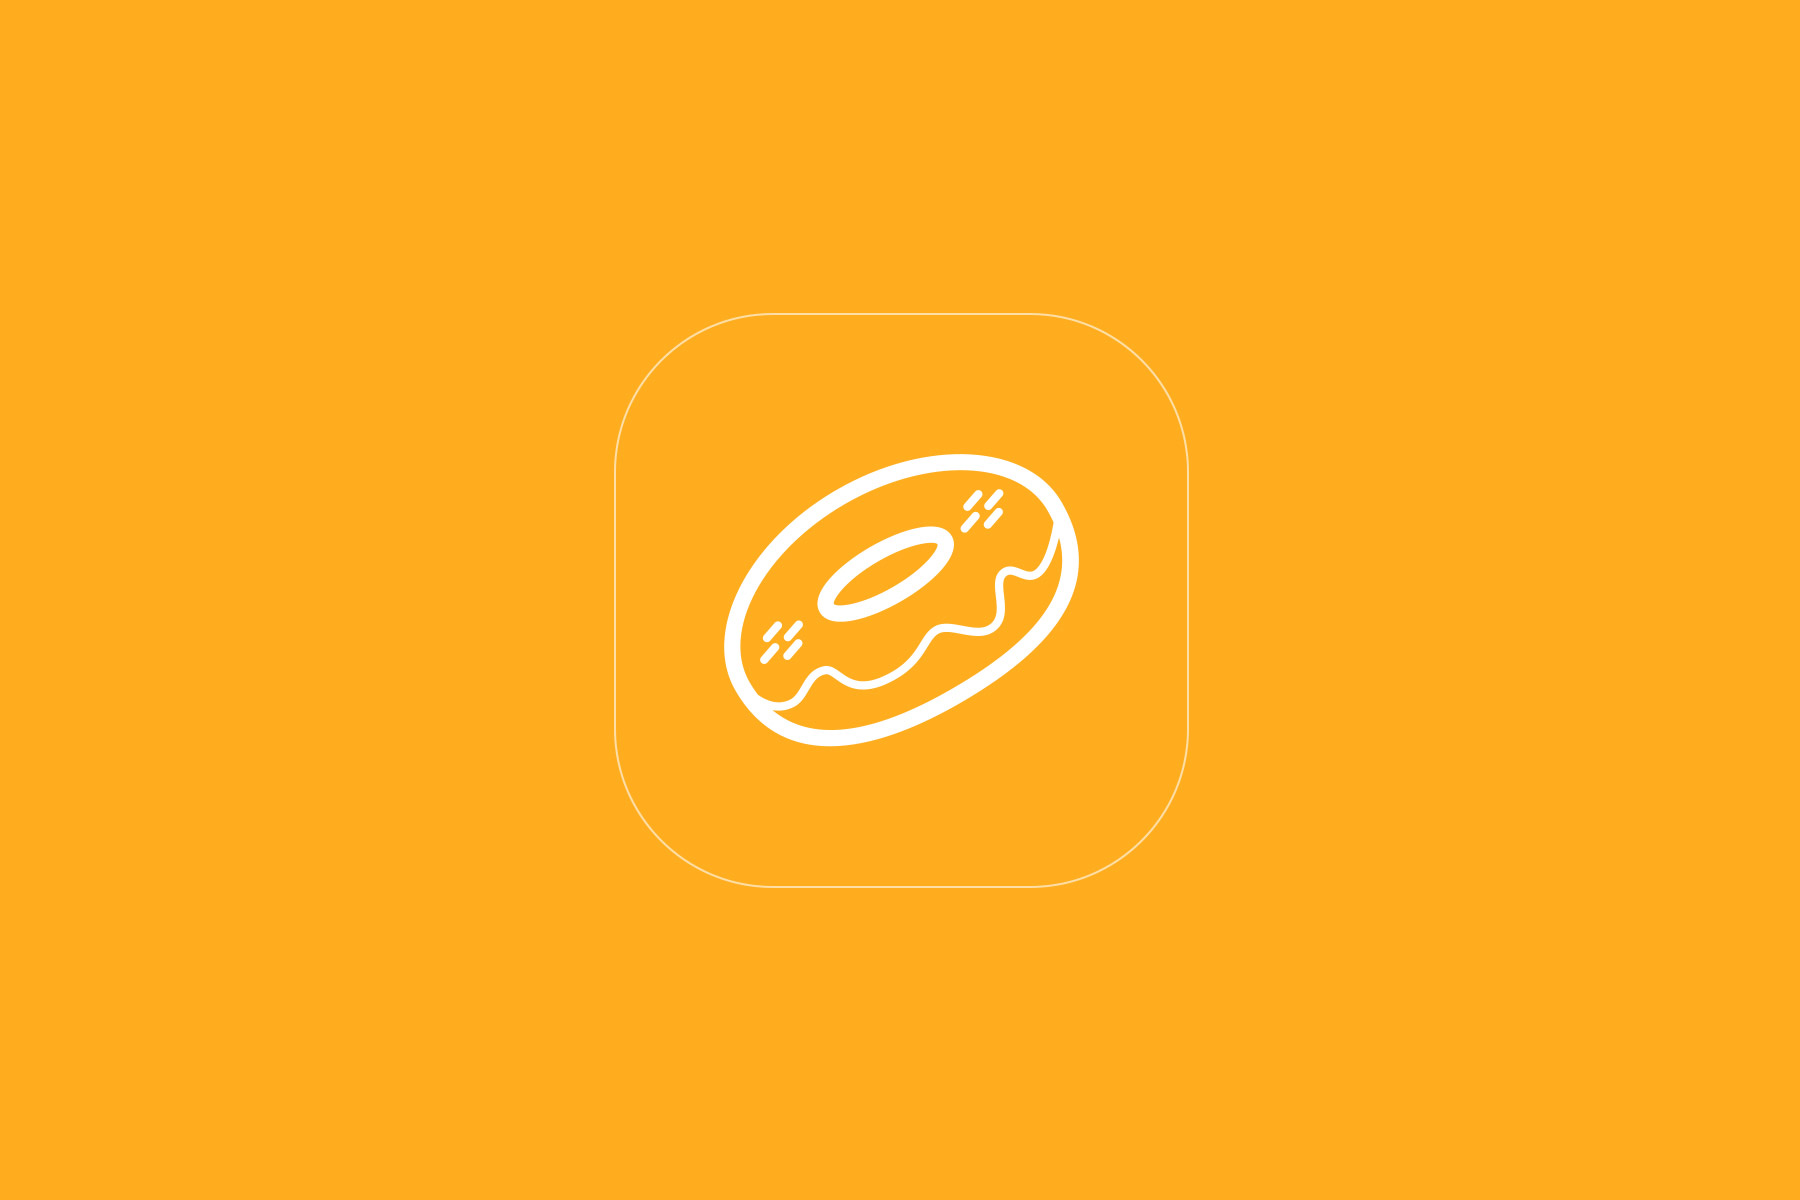 foodrush app icon with donut